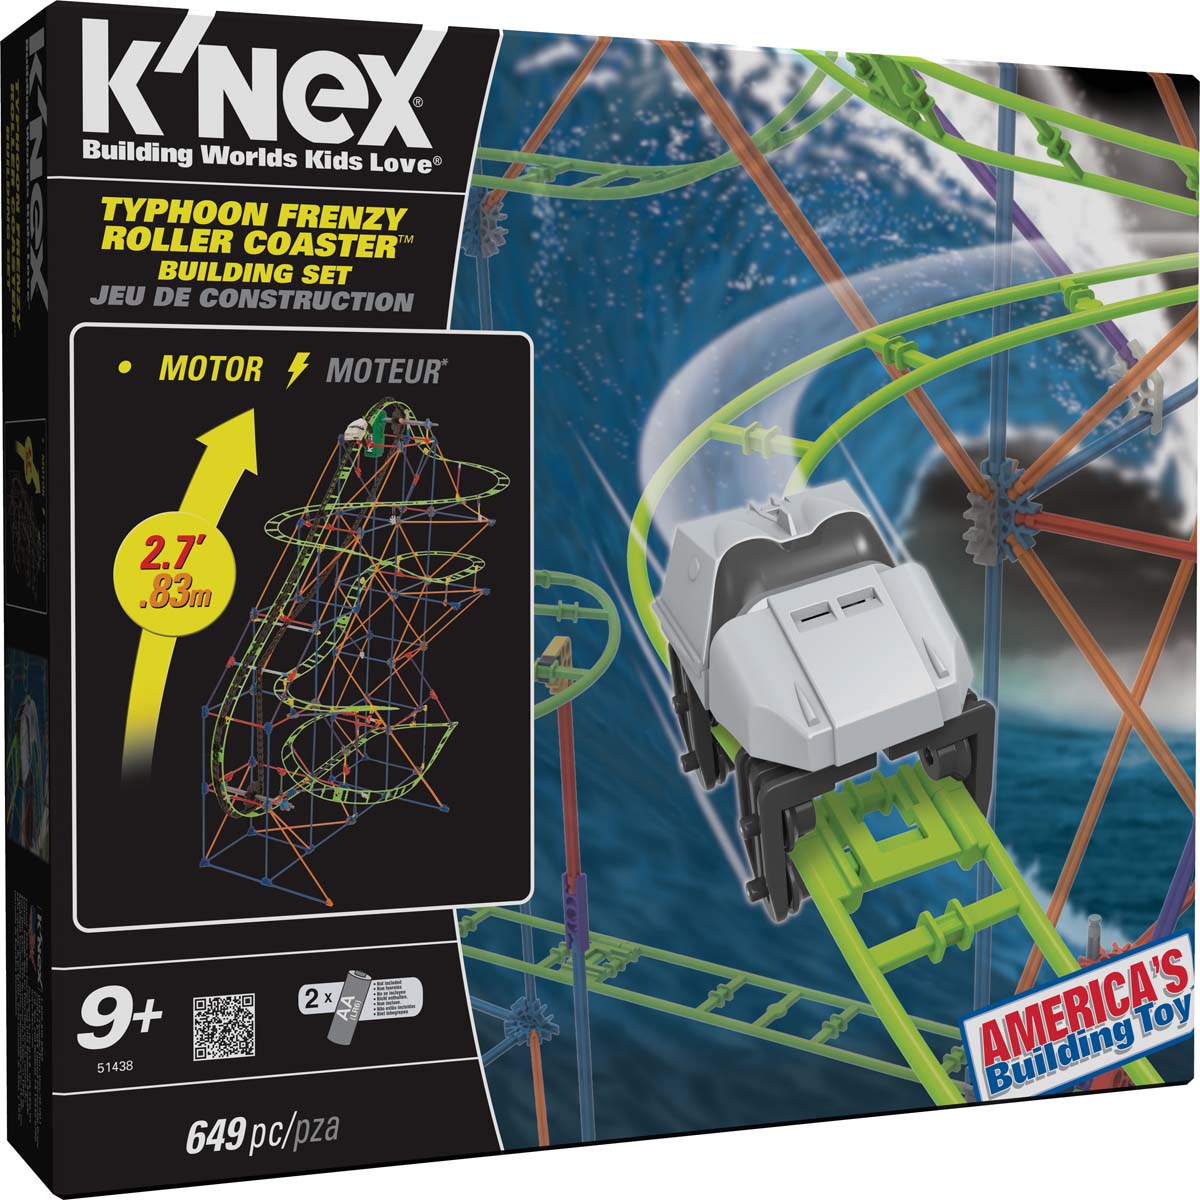 Knex Typhoon Frenzy Coaster